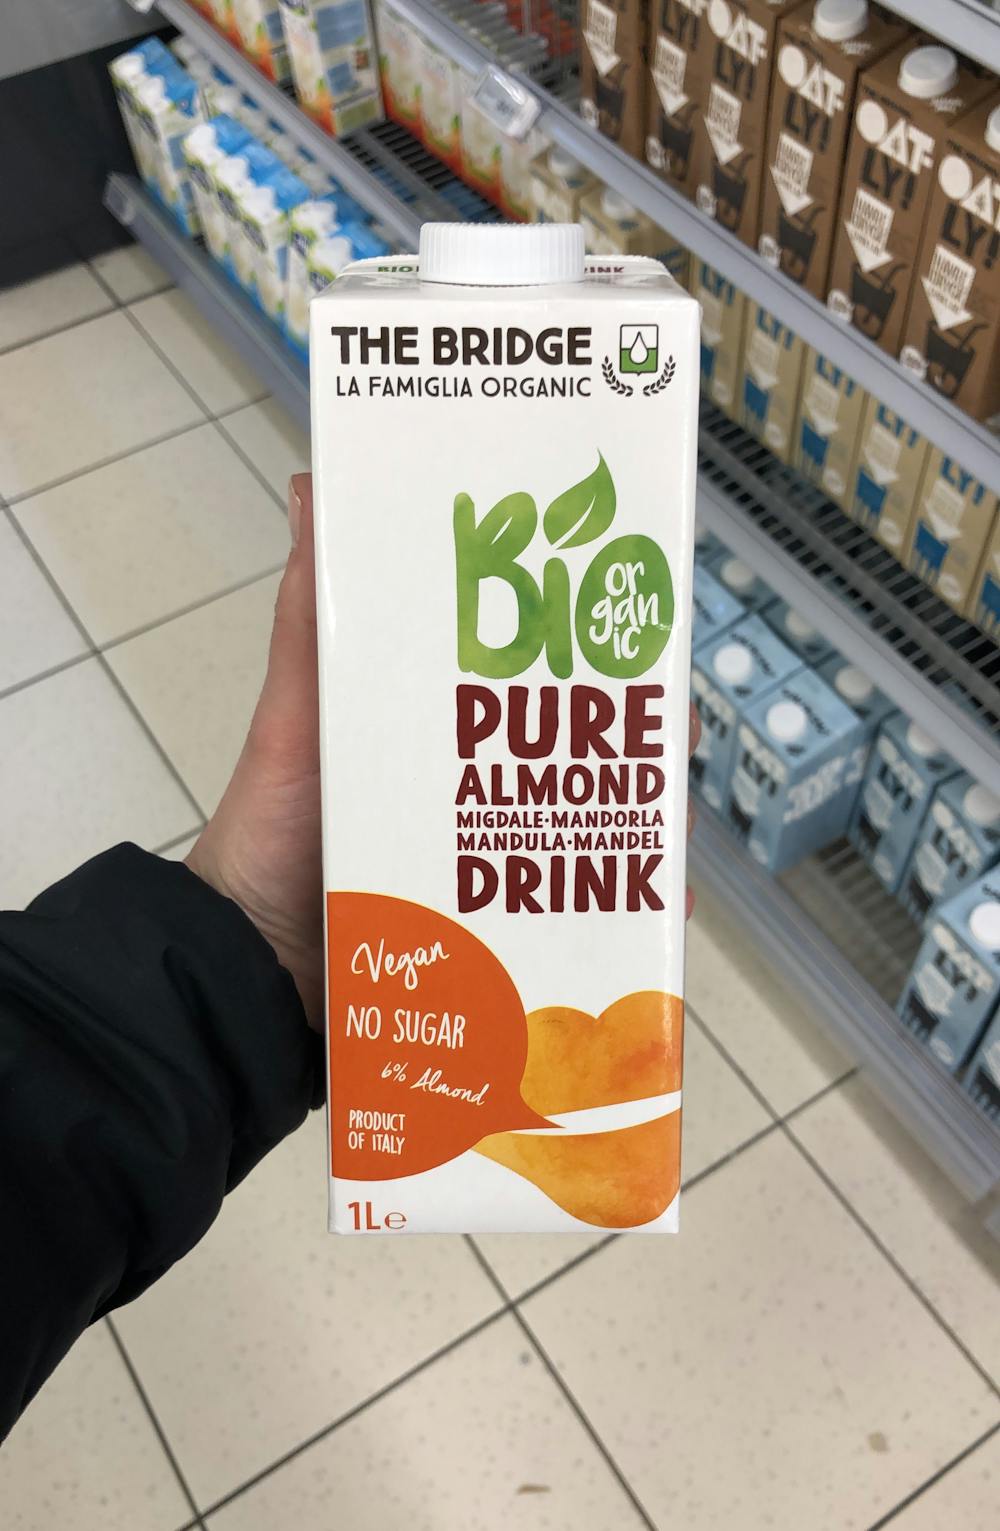 Pure almond drink, Bi organic